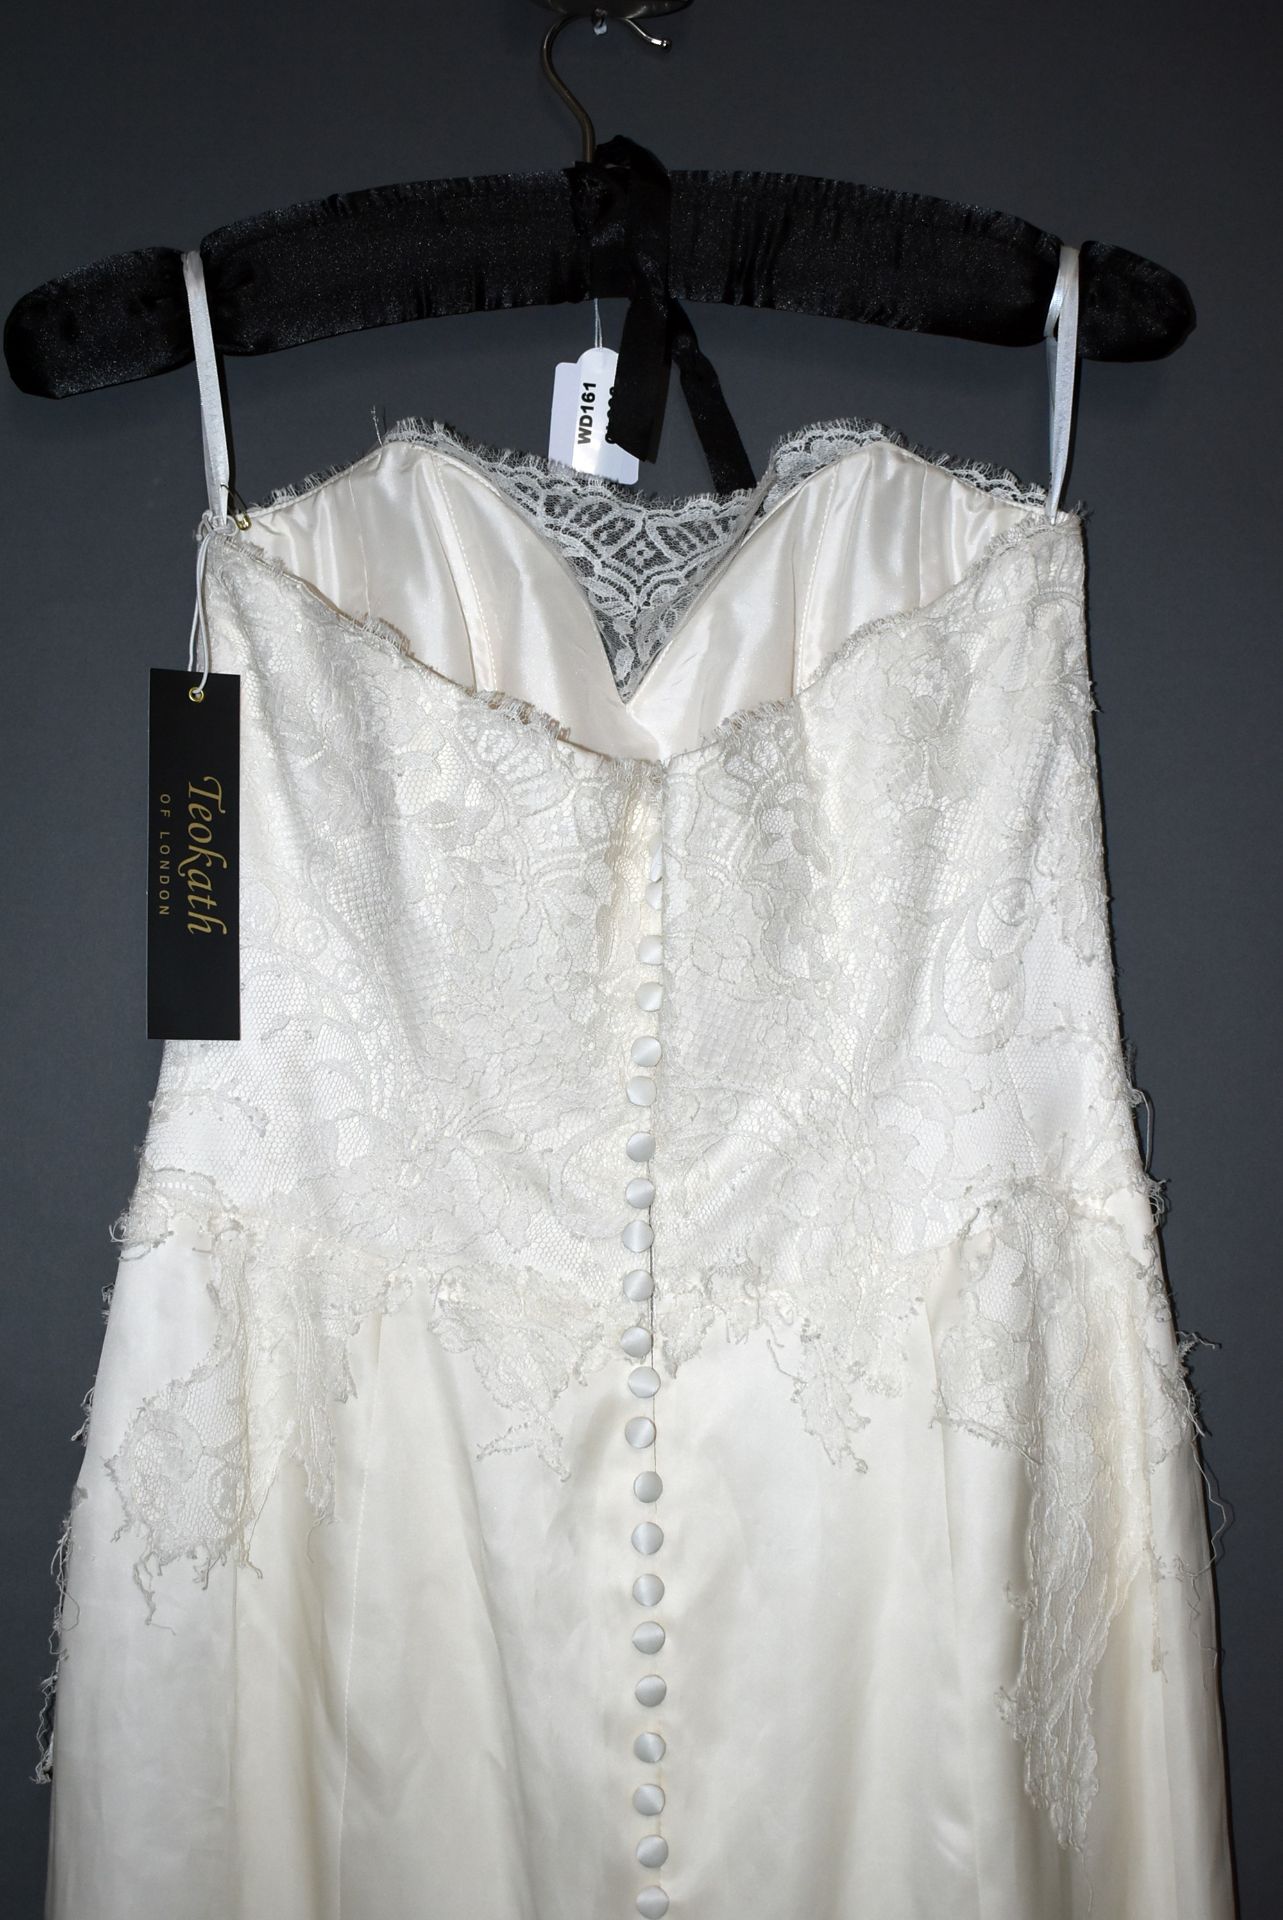 1 x ALAN HANNAH Strapless Lace & Satin Fishtail Dress Designer Wedding Dress Bridal RRP £2,700 UK 14 - Image 3 of 7